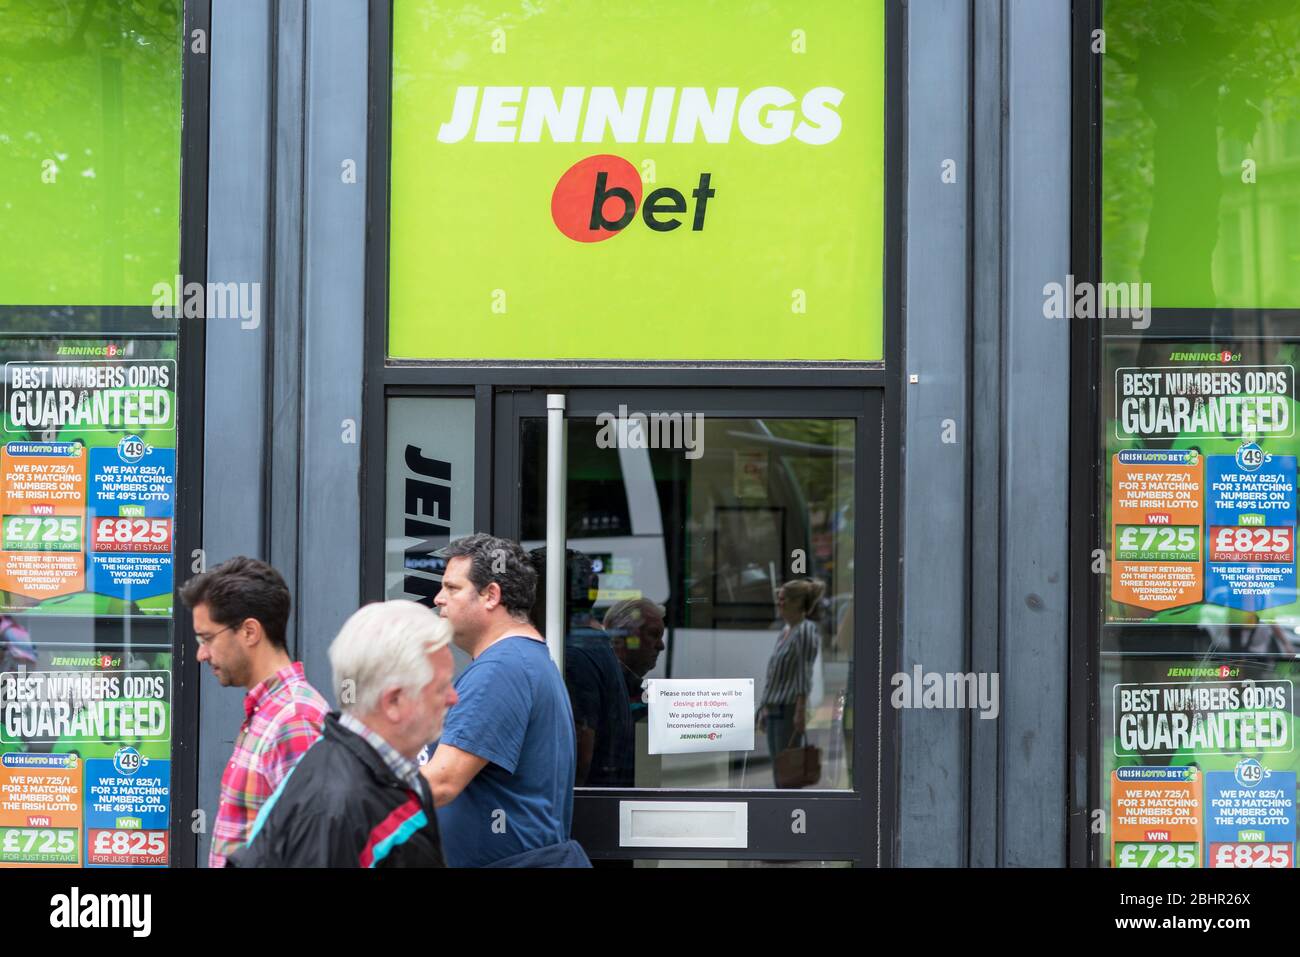 Jennings Bet. Stock Photo